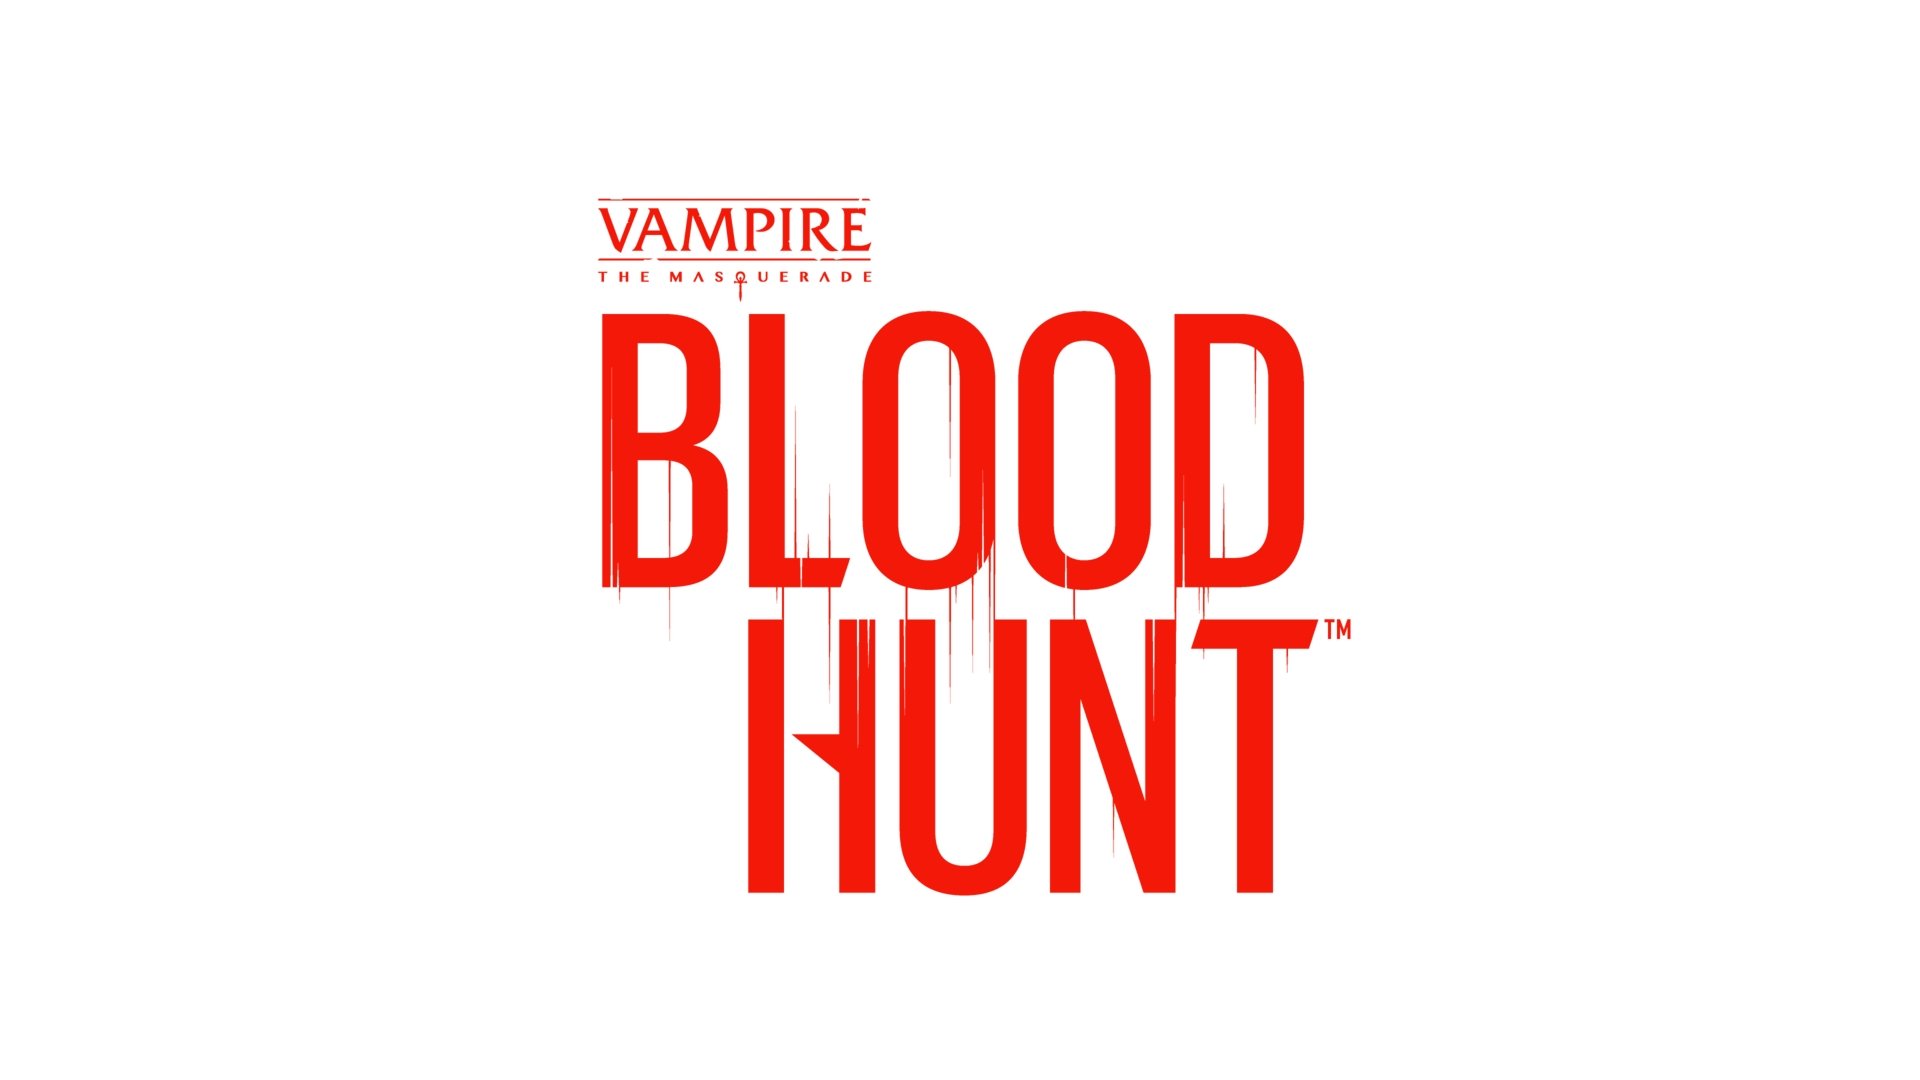 Vampire: The Masquerade - Bloodhunt launches April 27 - Gematsu